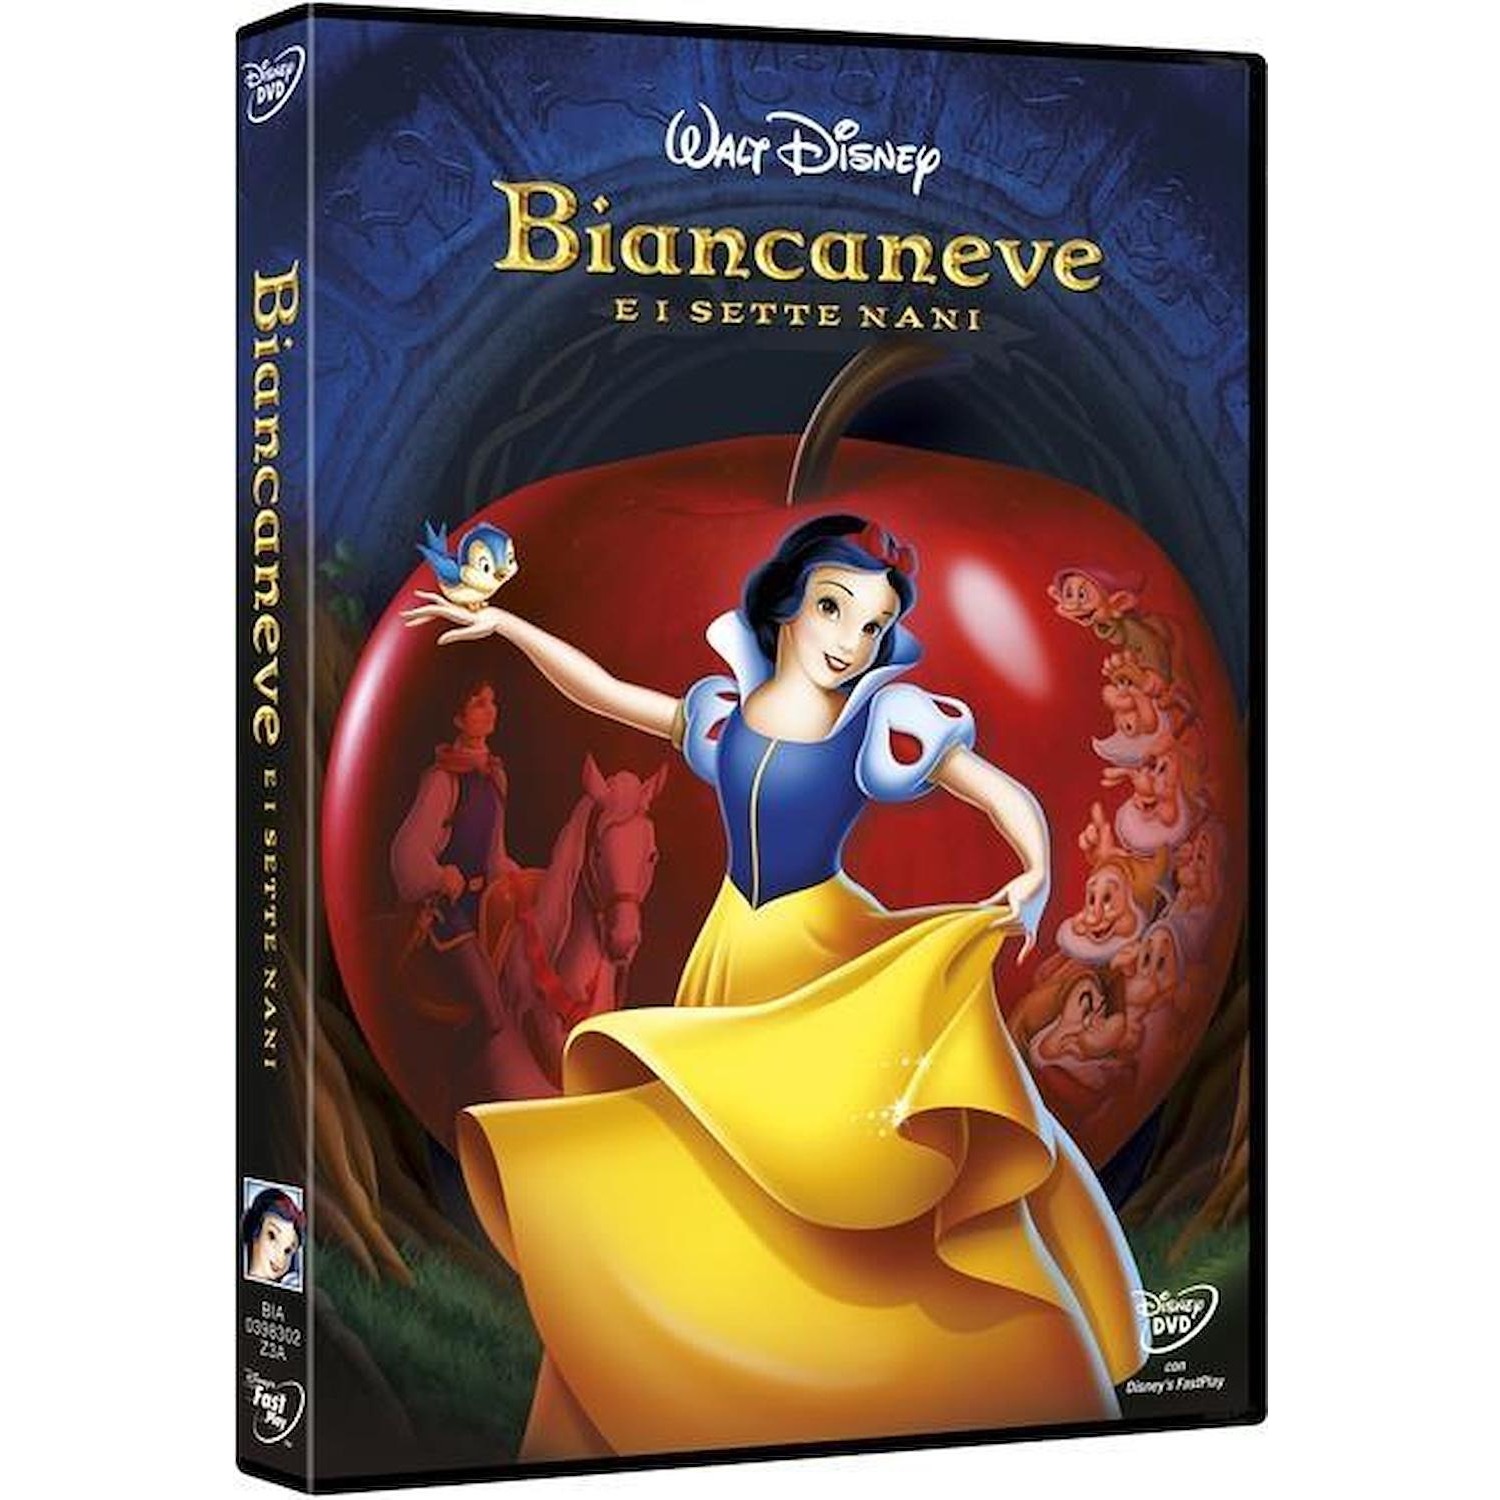 Immagine per DVD Biancaneve e i sette nani da DIMOStore